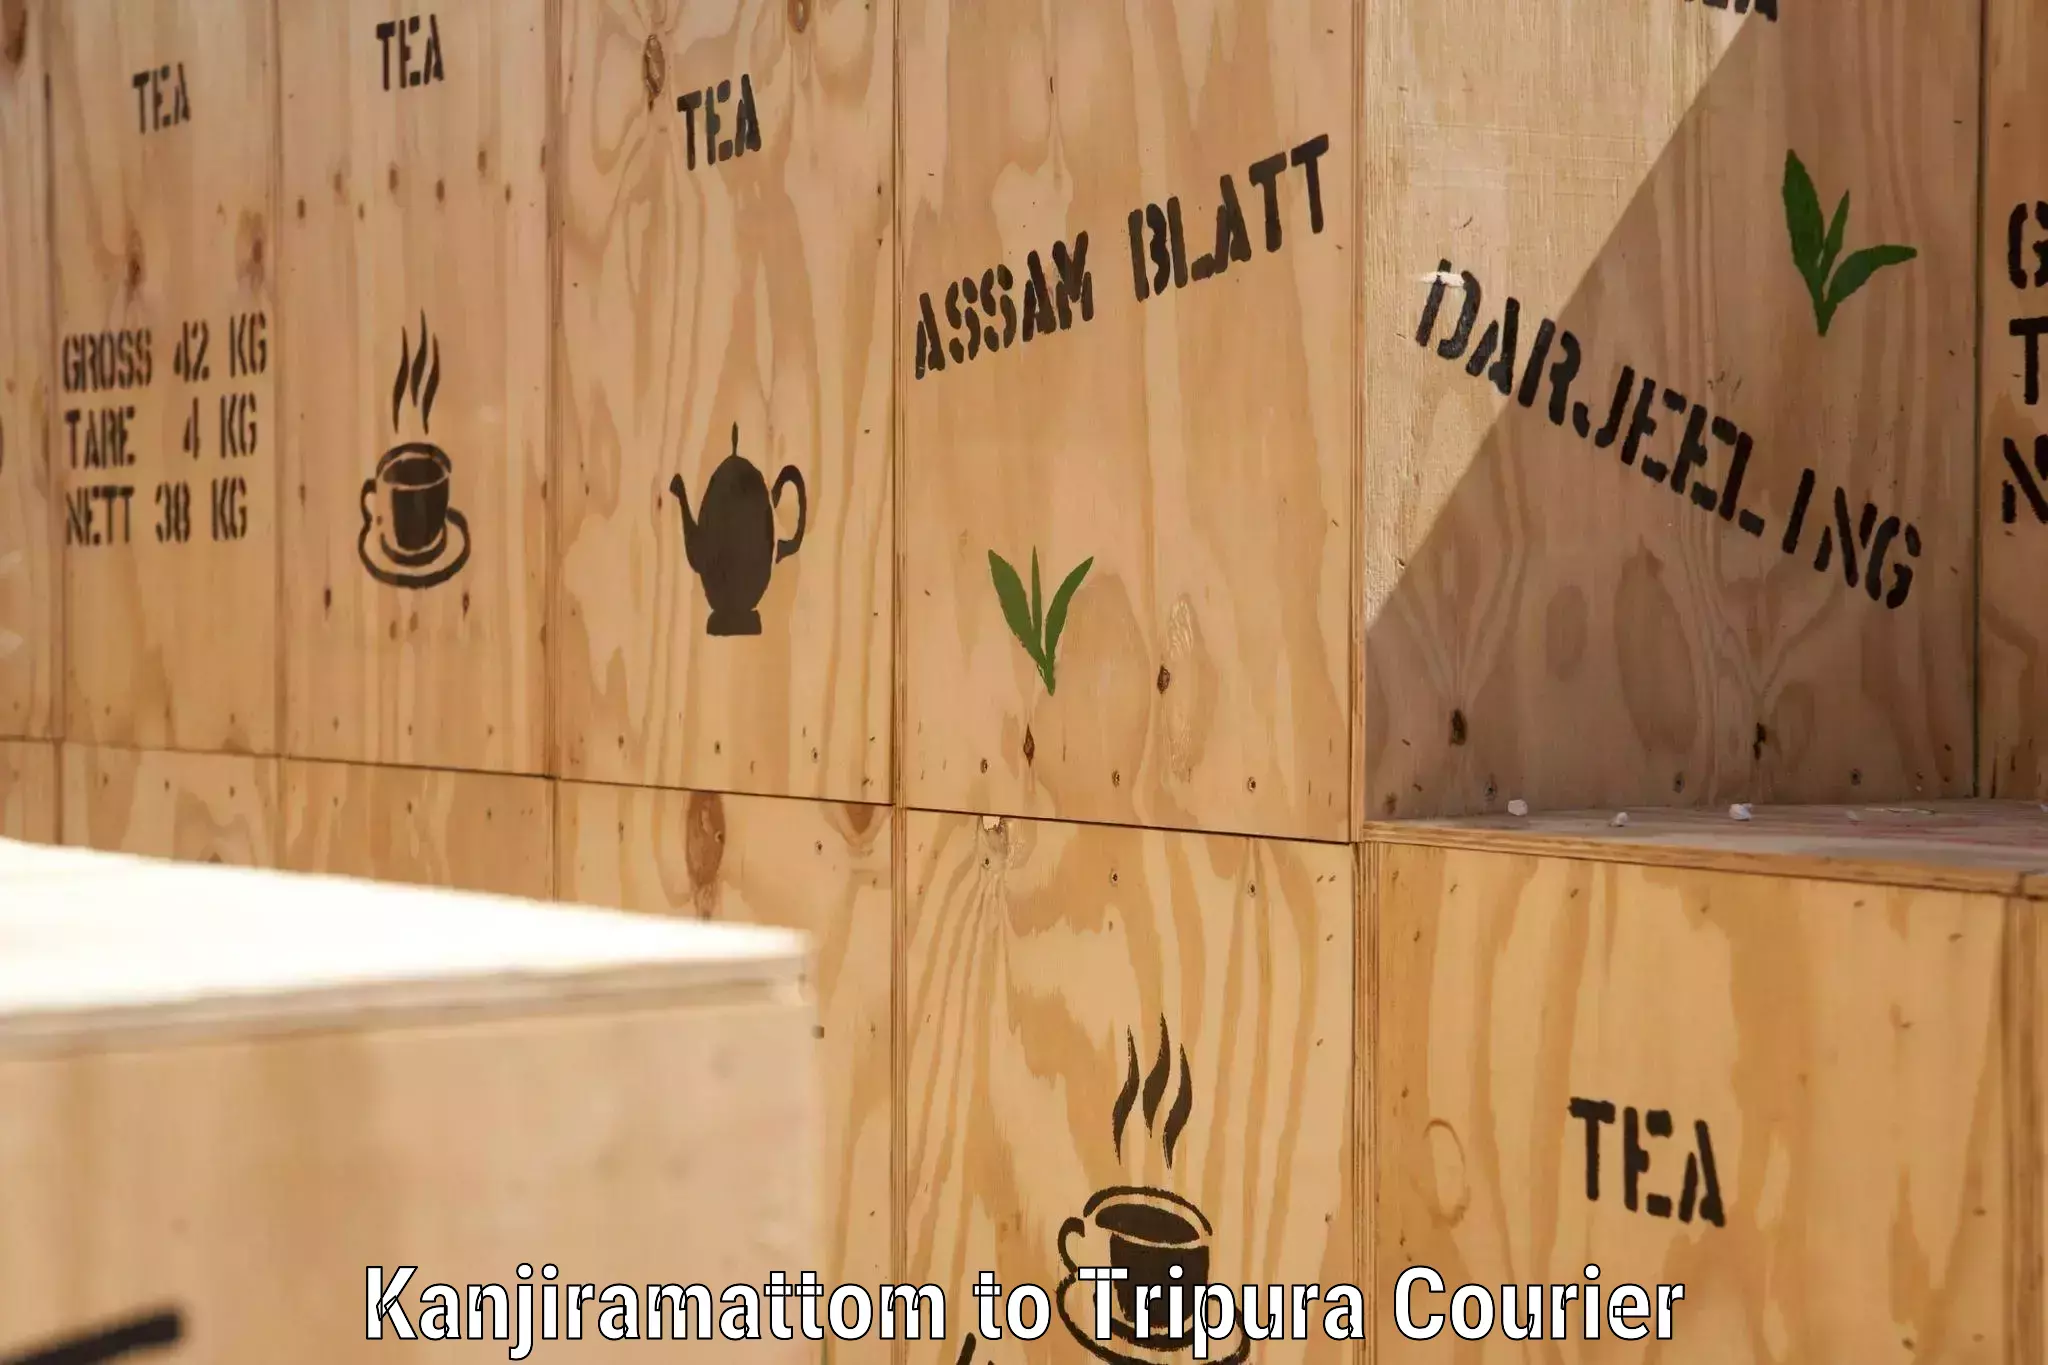 State-of-the-art courier technology Kanjiramattom to Kailashahar